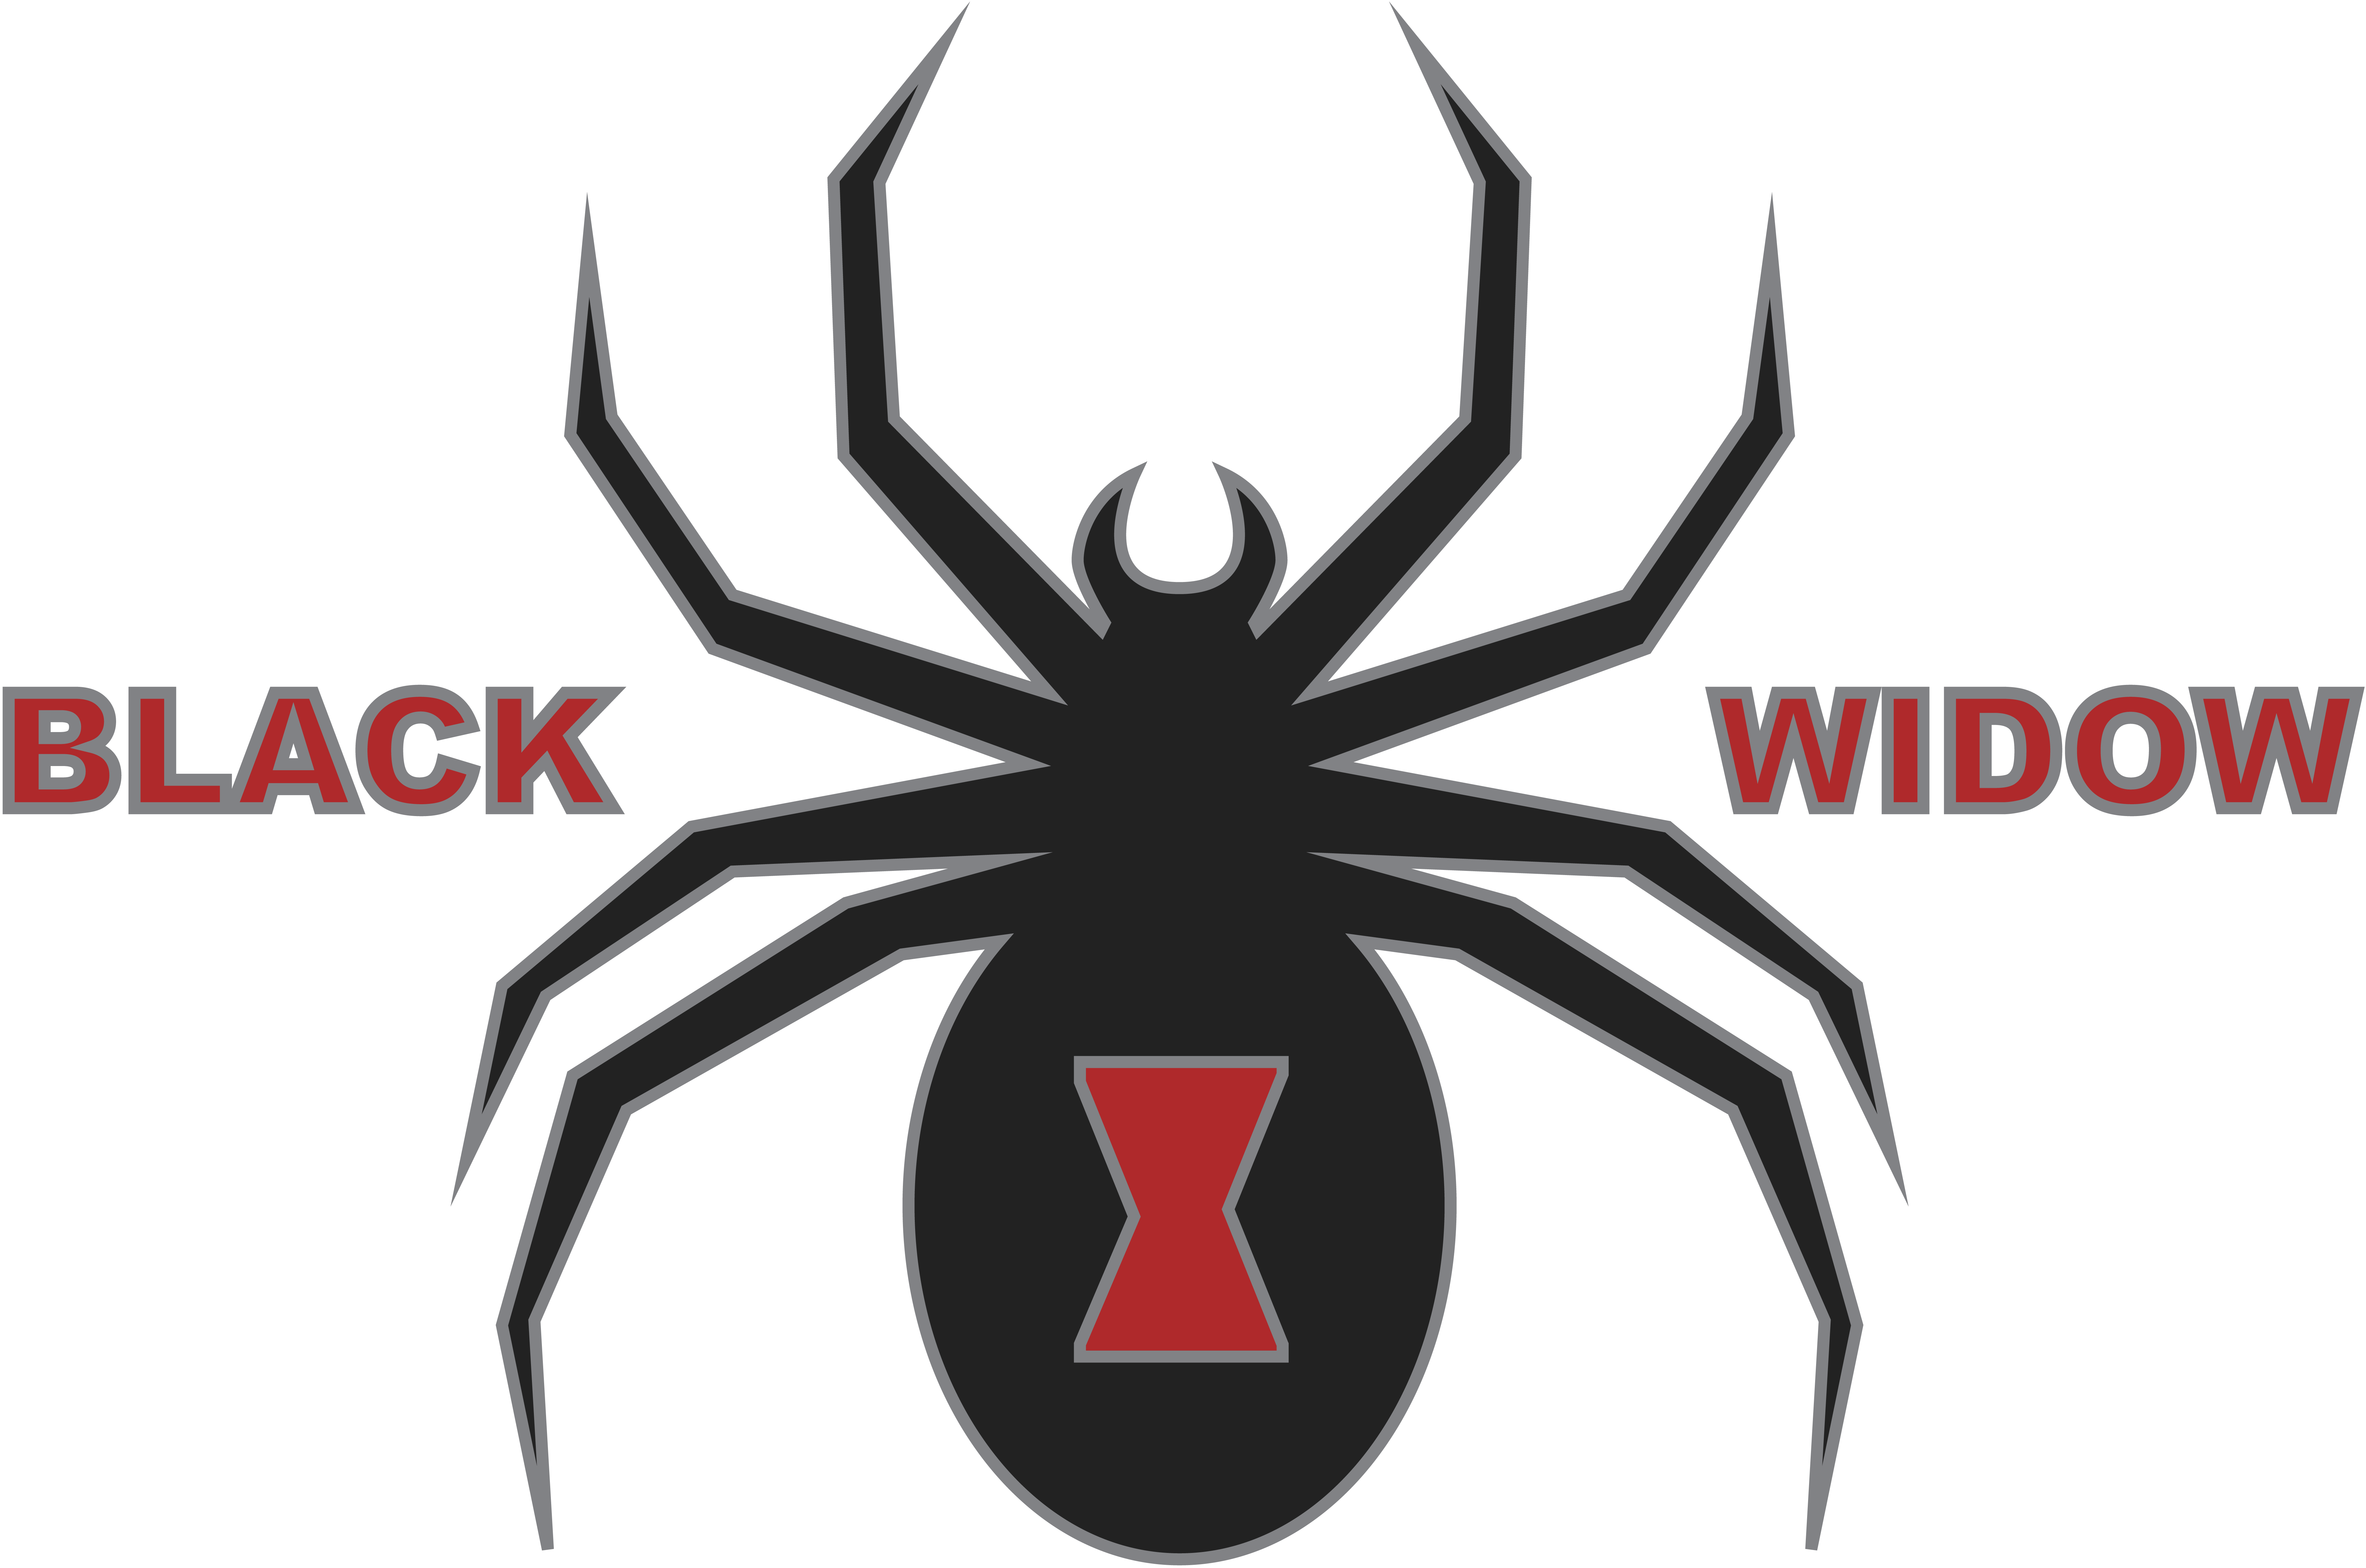 Black widow Logos